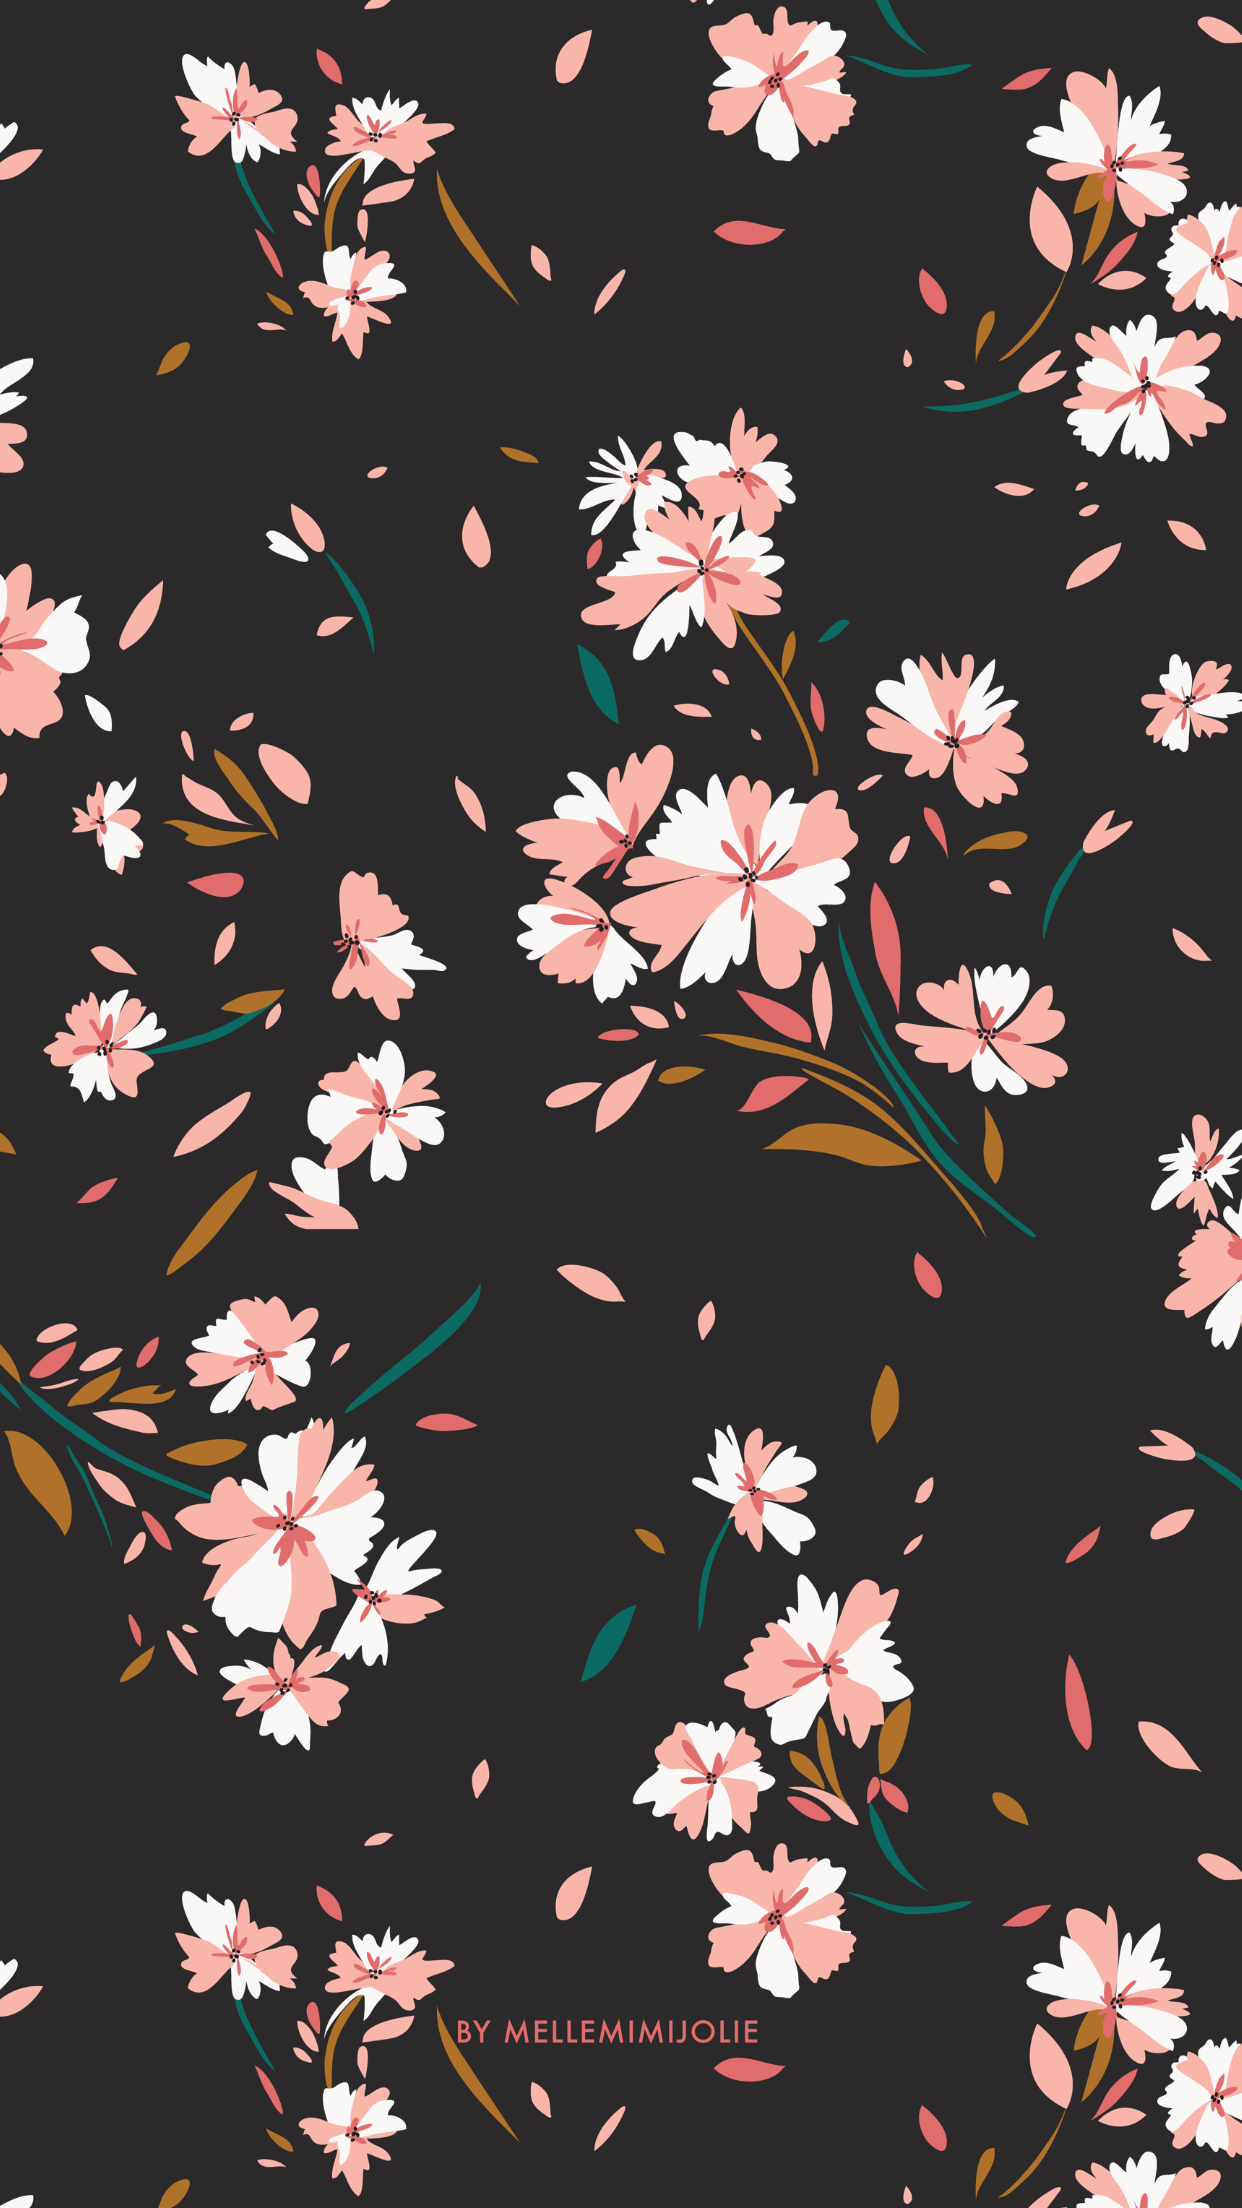 Iphone Floral Wallpaper Hd - HD Wallpaper 